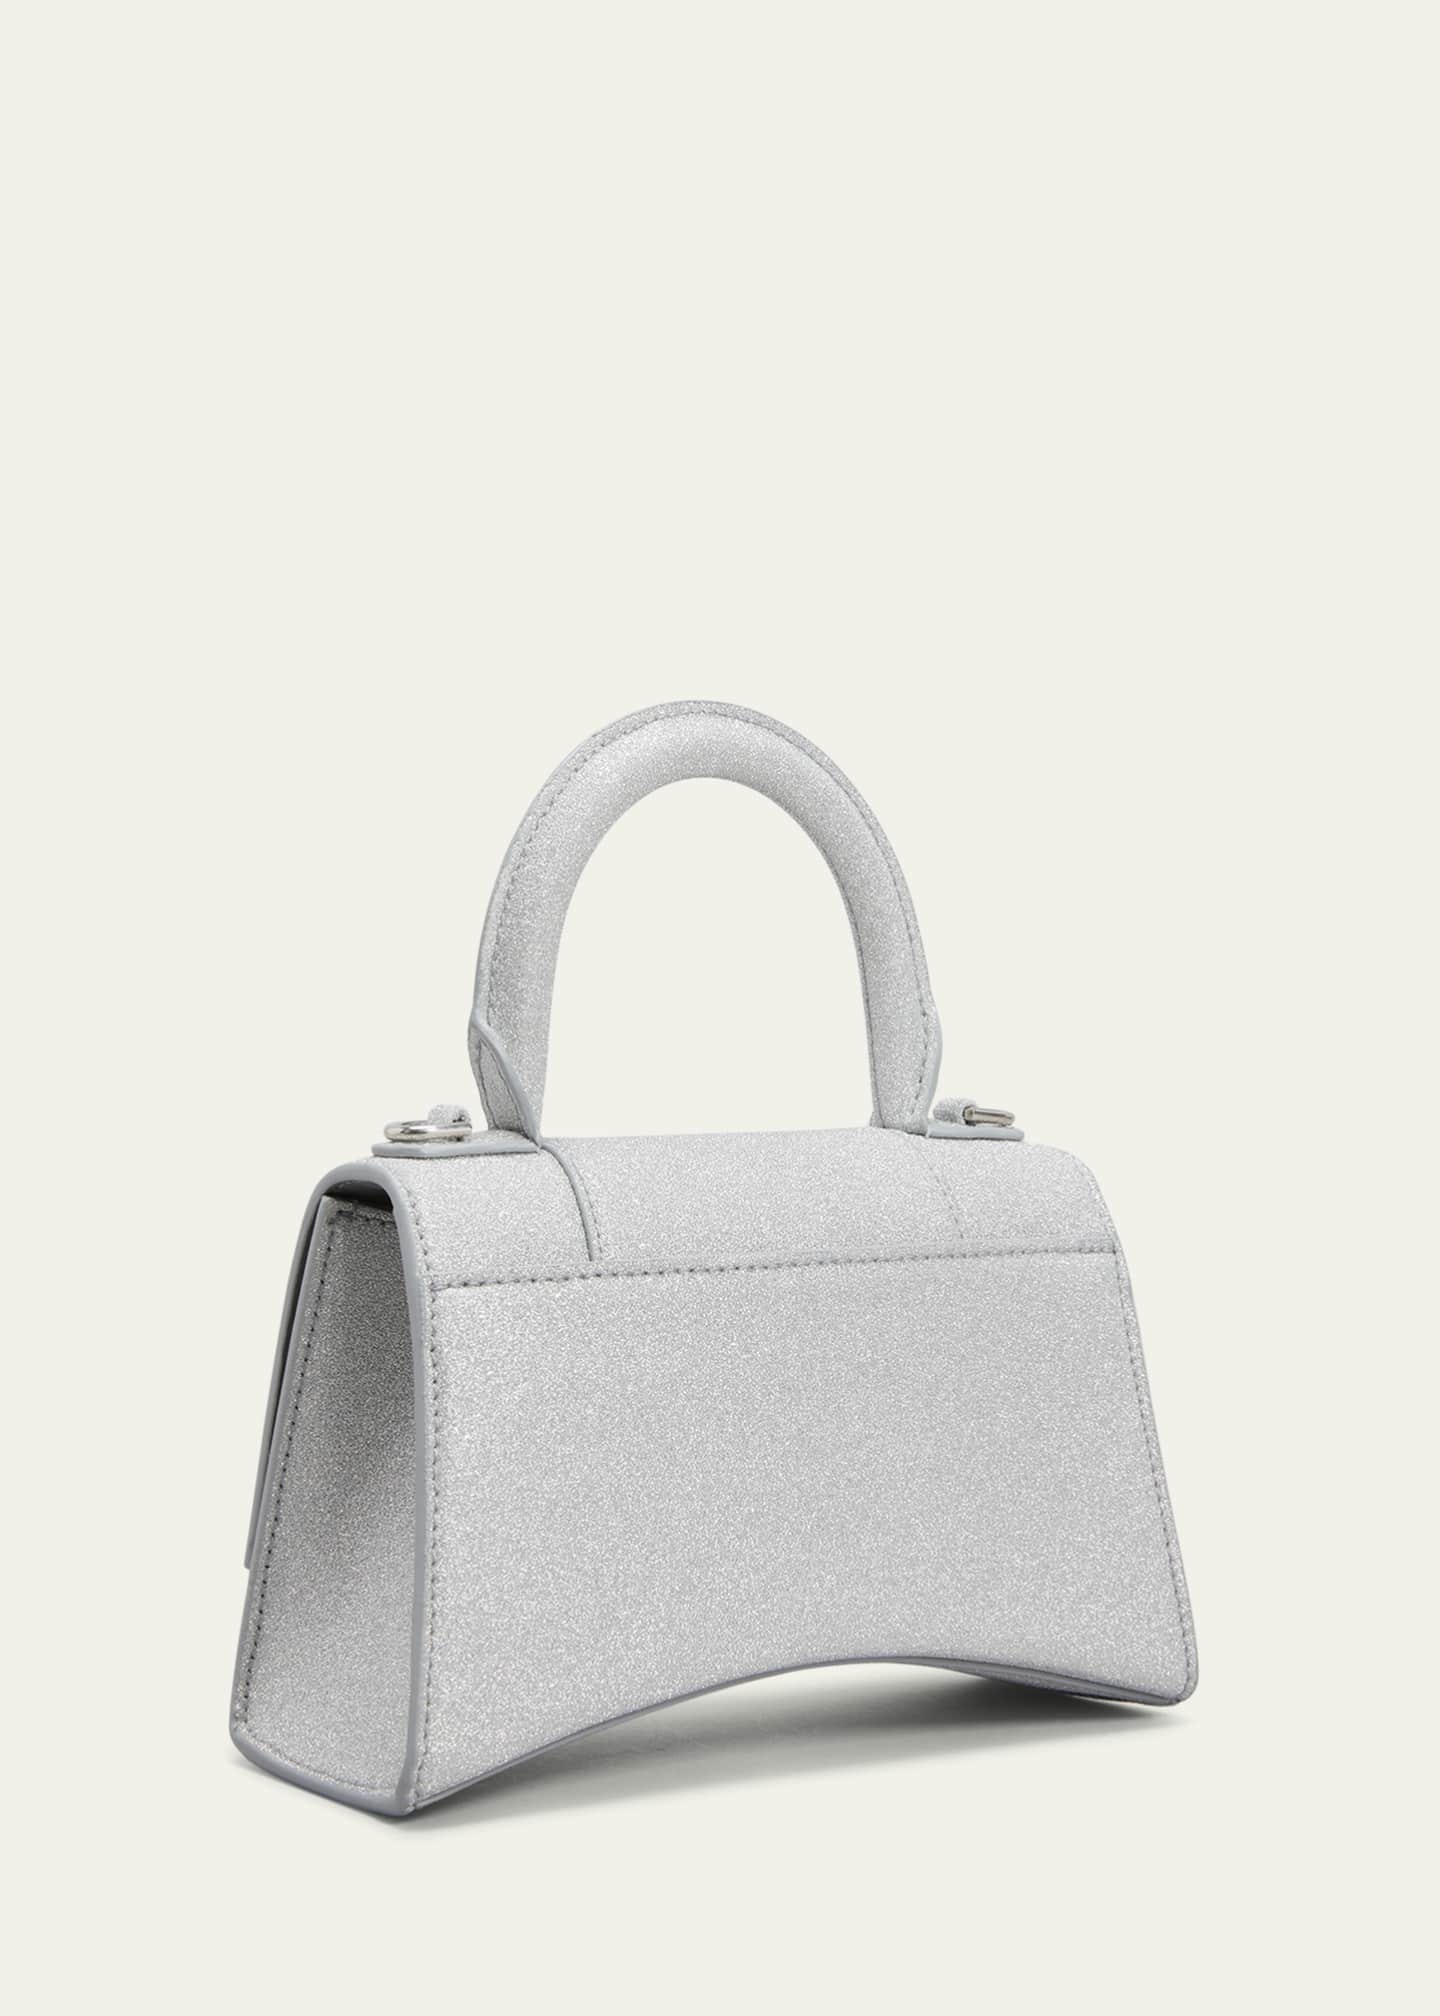 Balenciaga Silver Mini Glitter Hourglass Bag